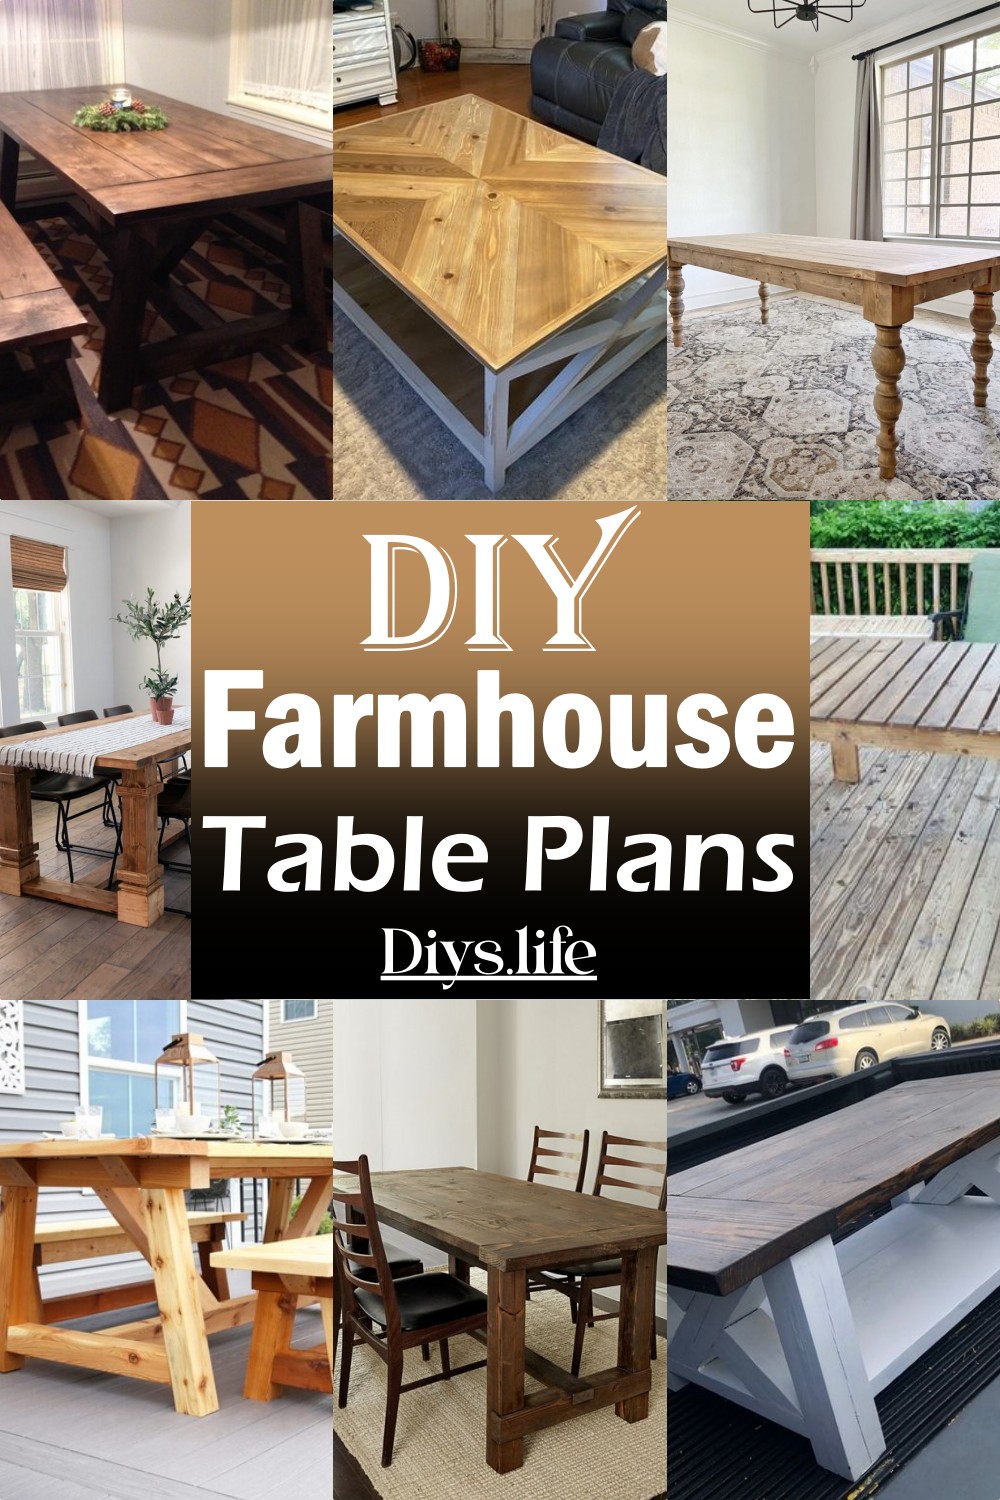 DIY Farmhouse Table Plans  For Everyone